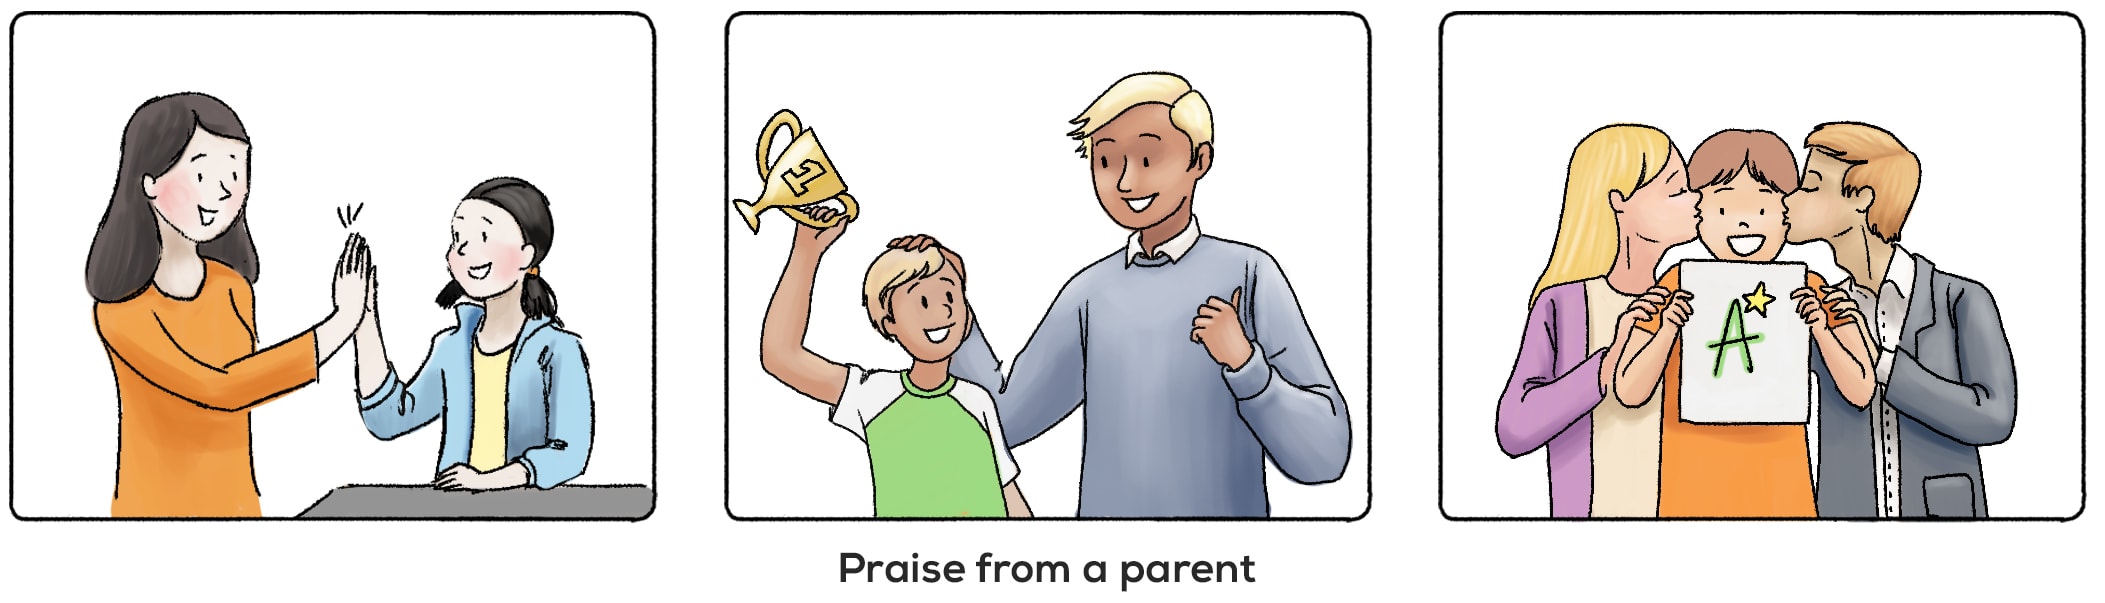 giving praise as a reinforcement